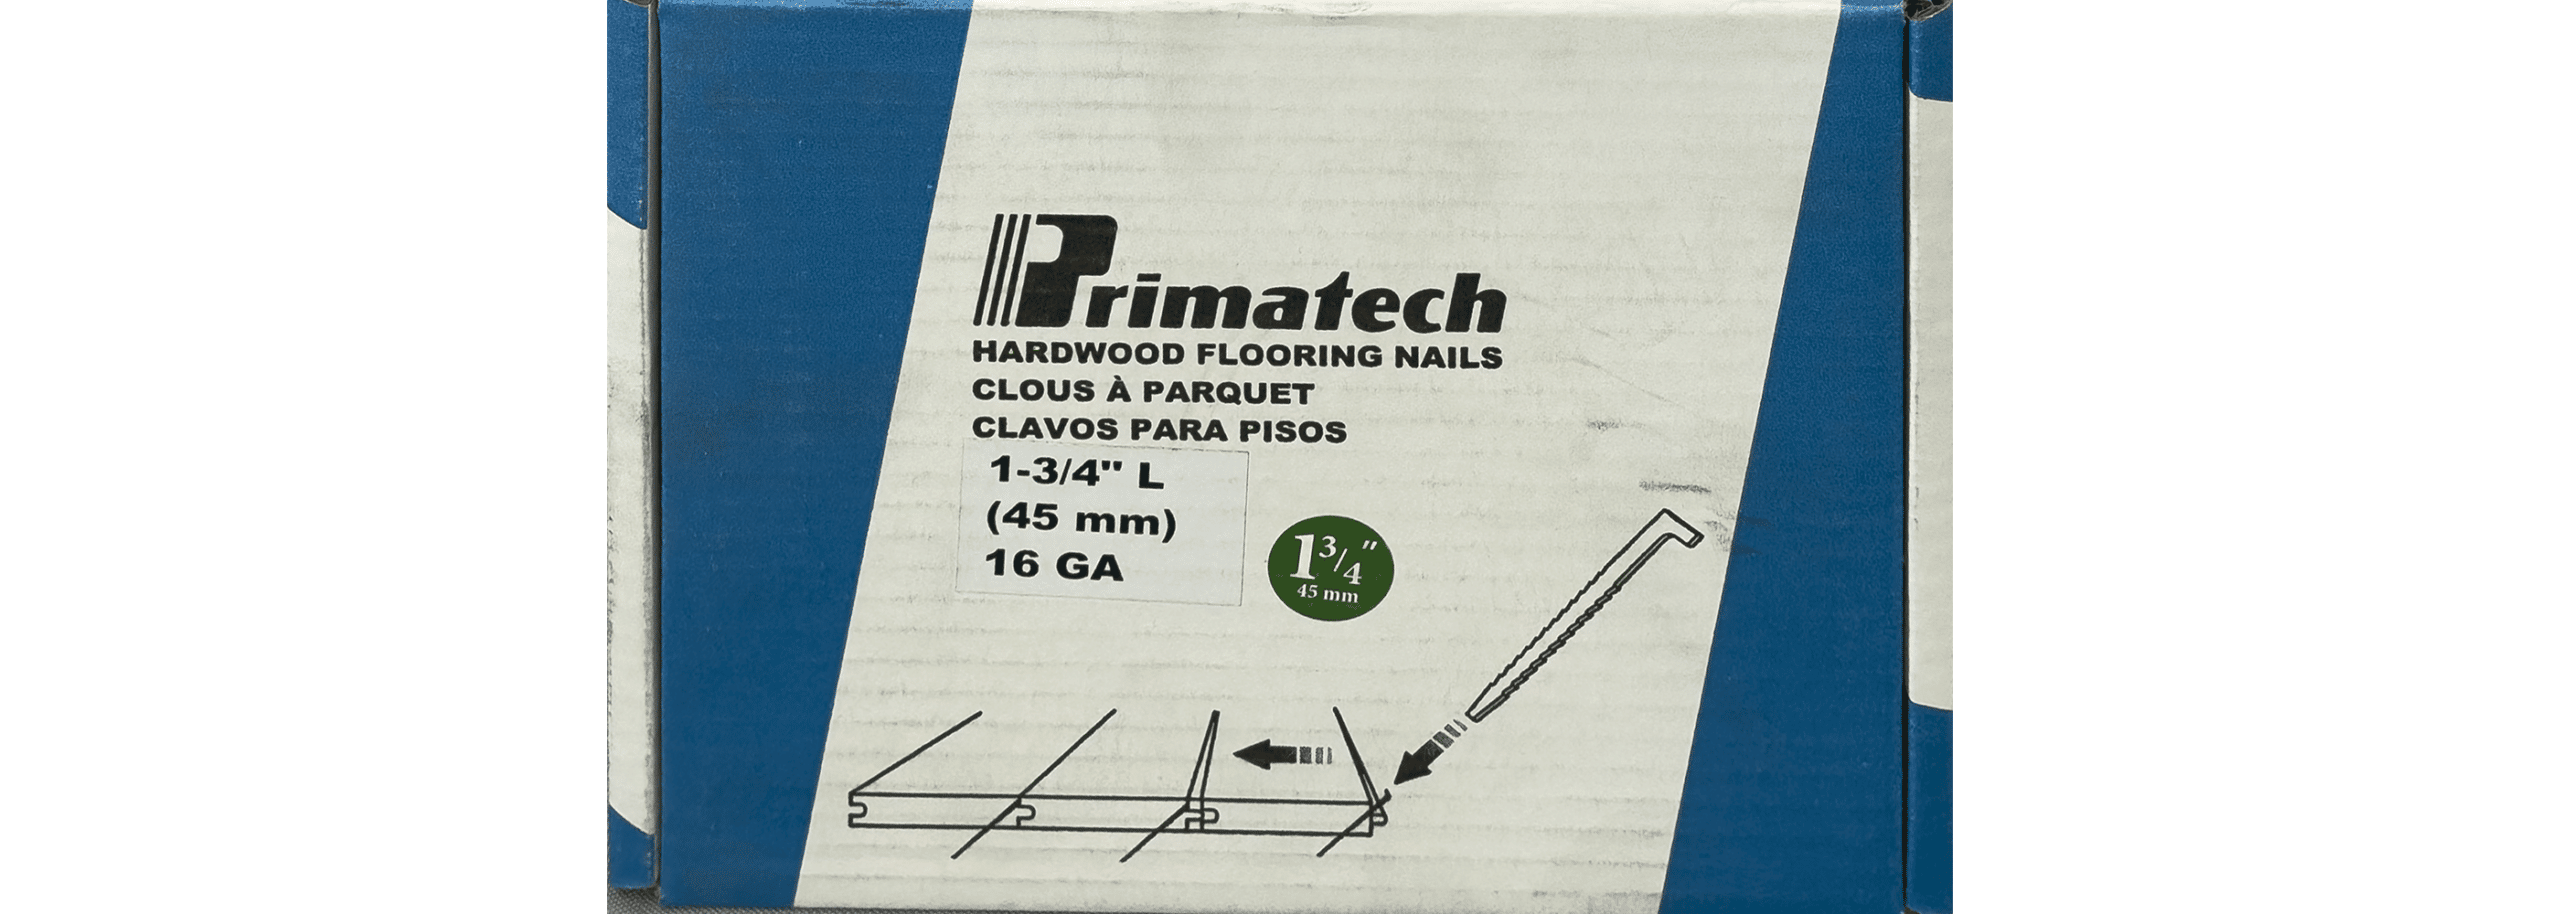 primatech 1-3/4 16g cleats